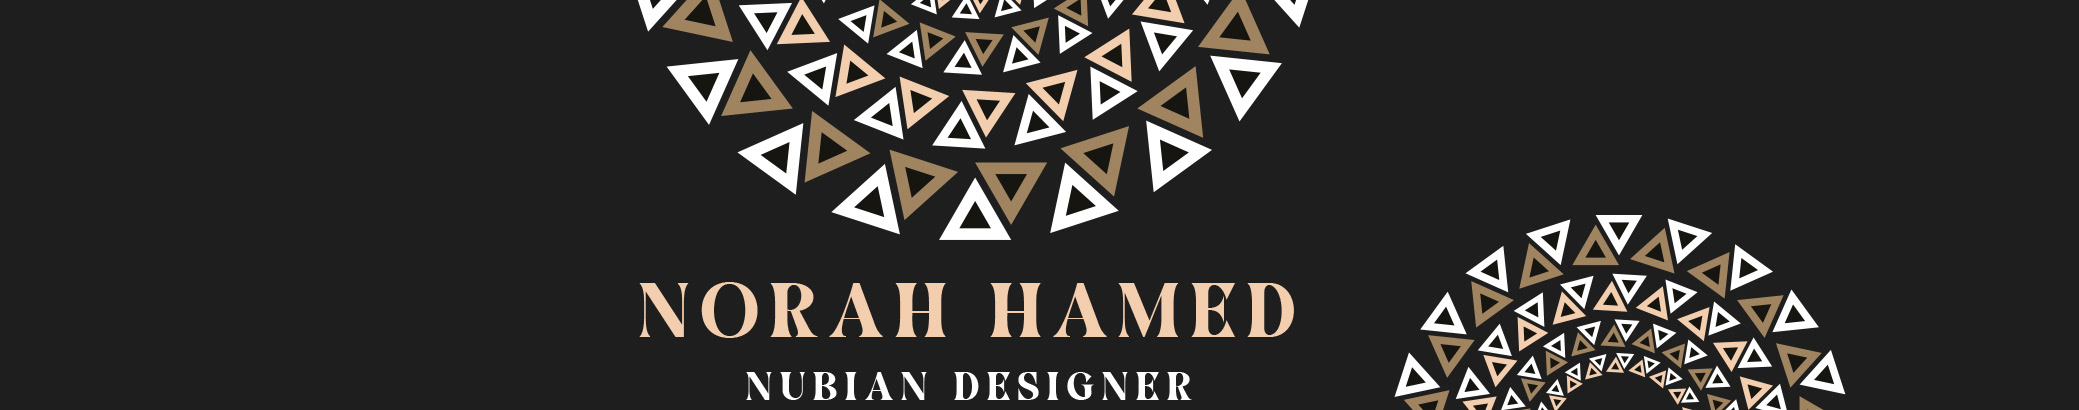 Norah Hamed's profile banner